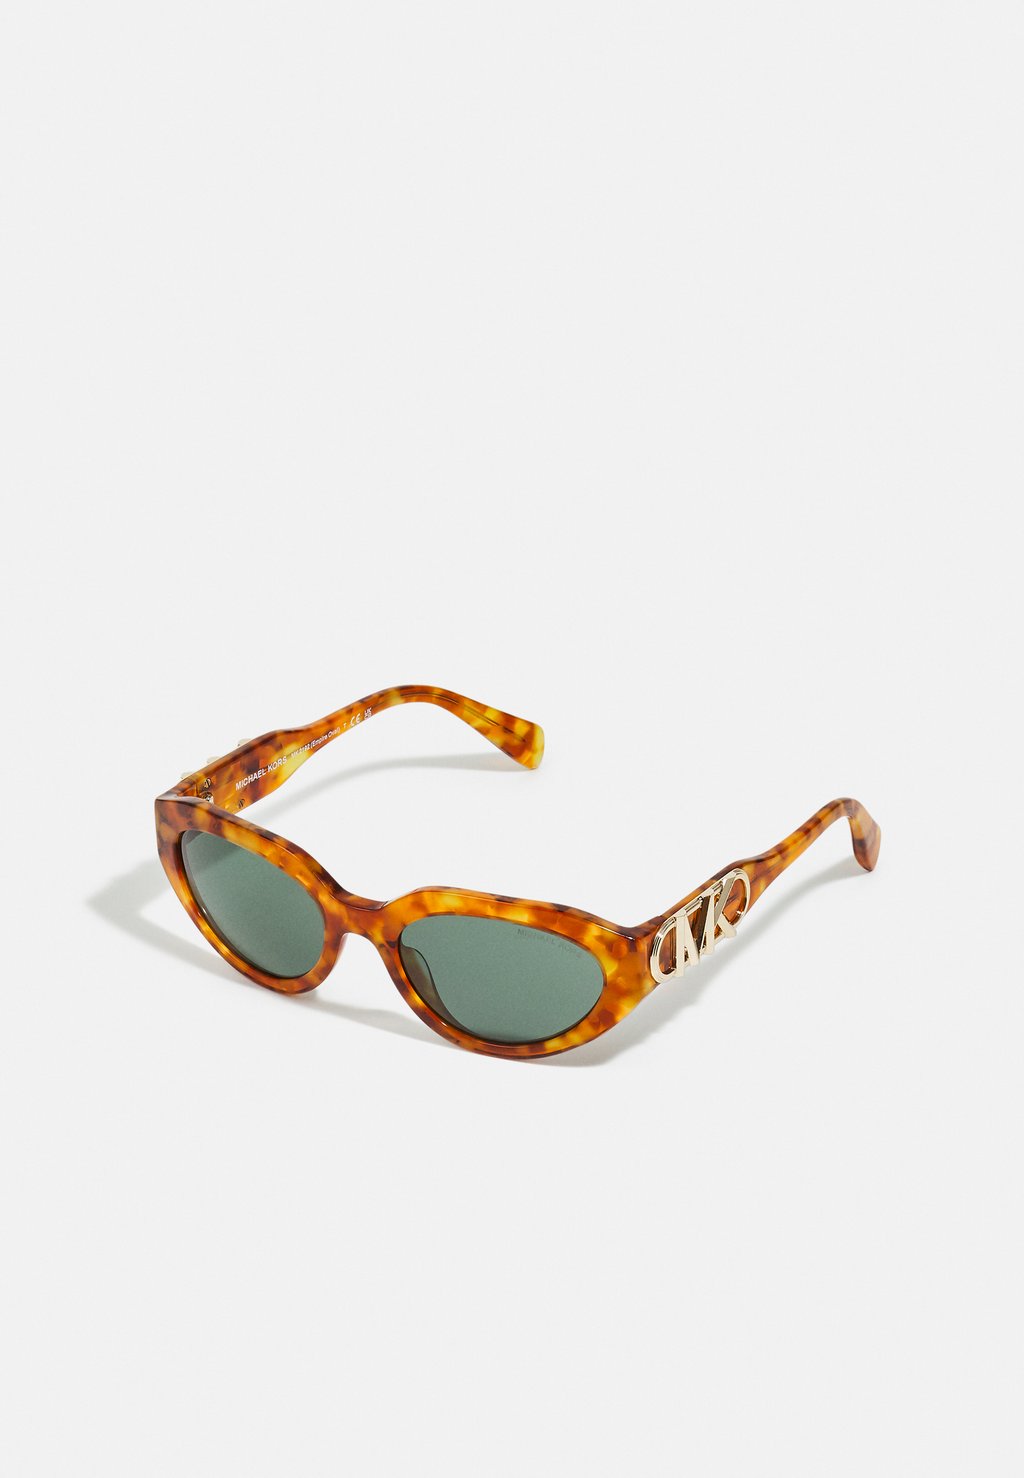 Солнцезащитные очки Empire Oval Michael Kors, цвет amber tortoise